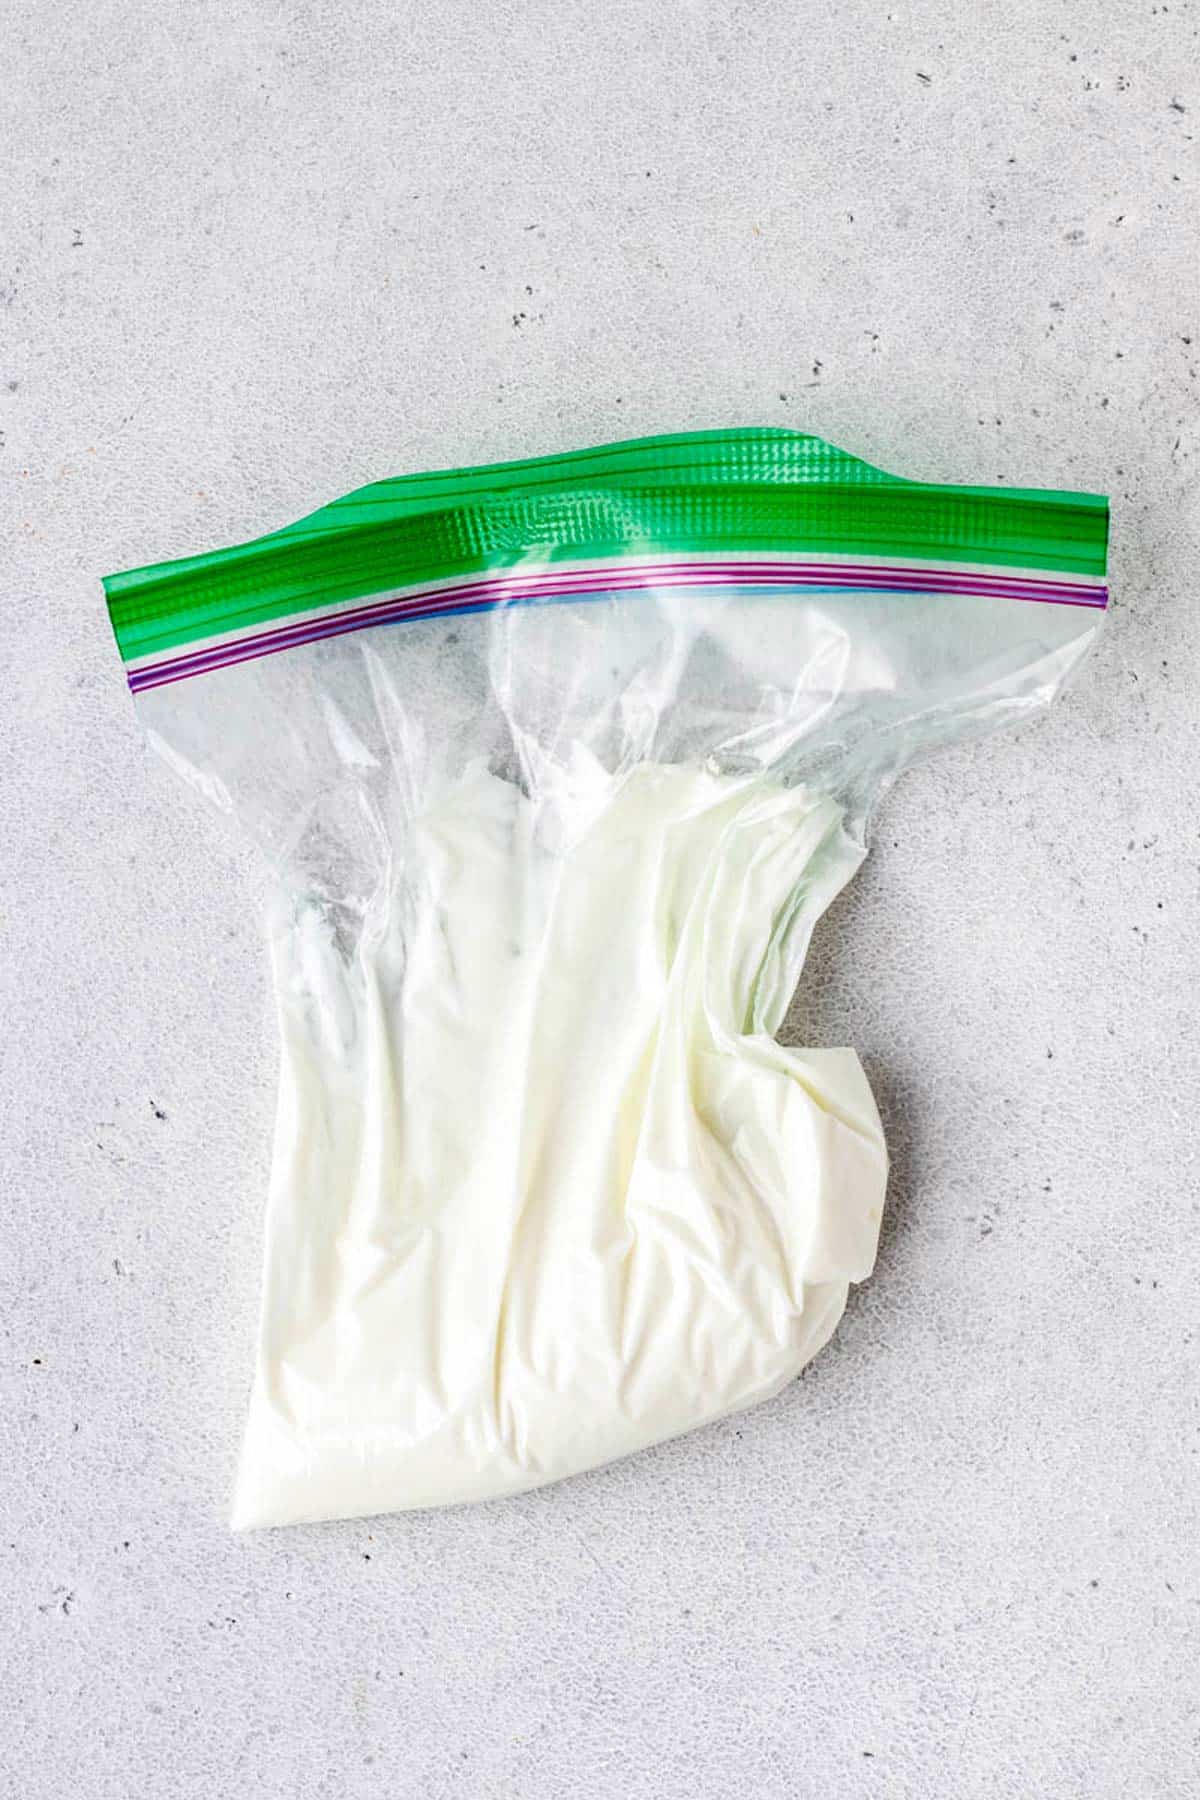 A zipper plastic bag filled with Greek yogurt.